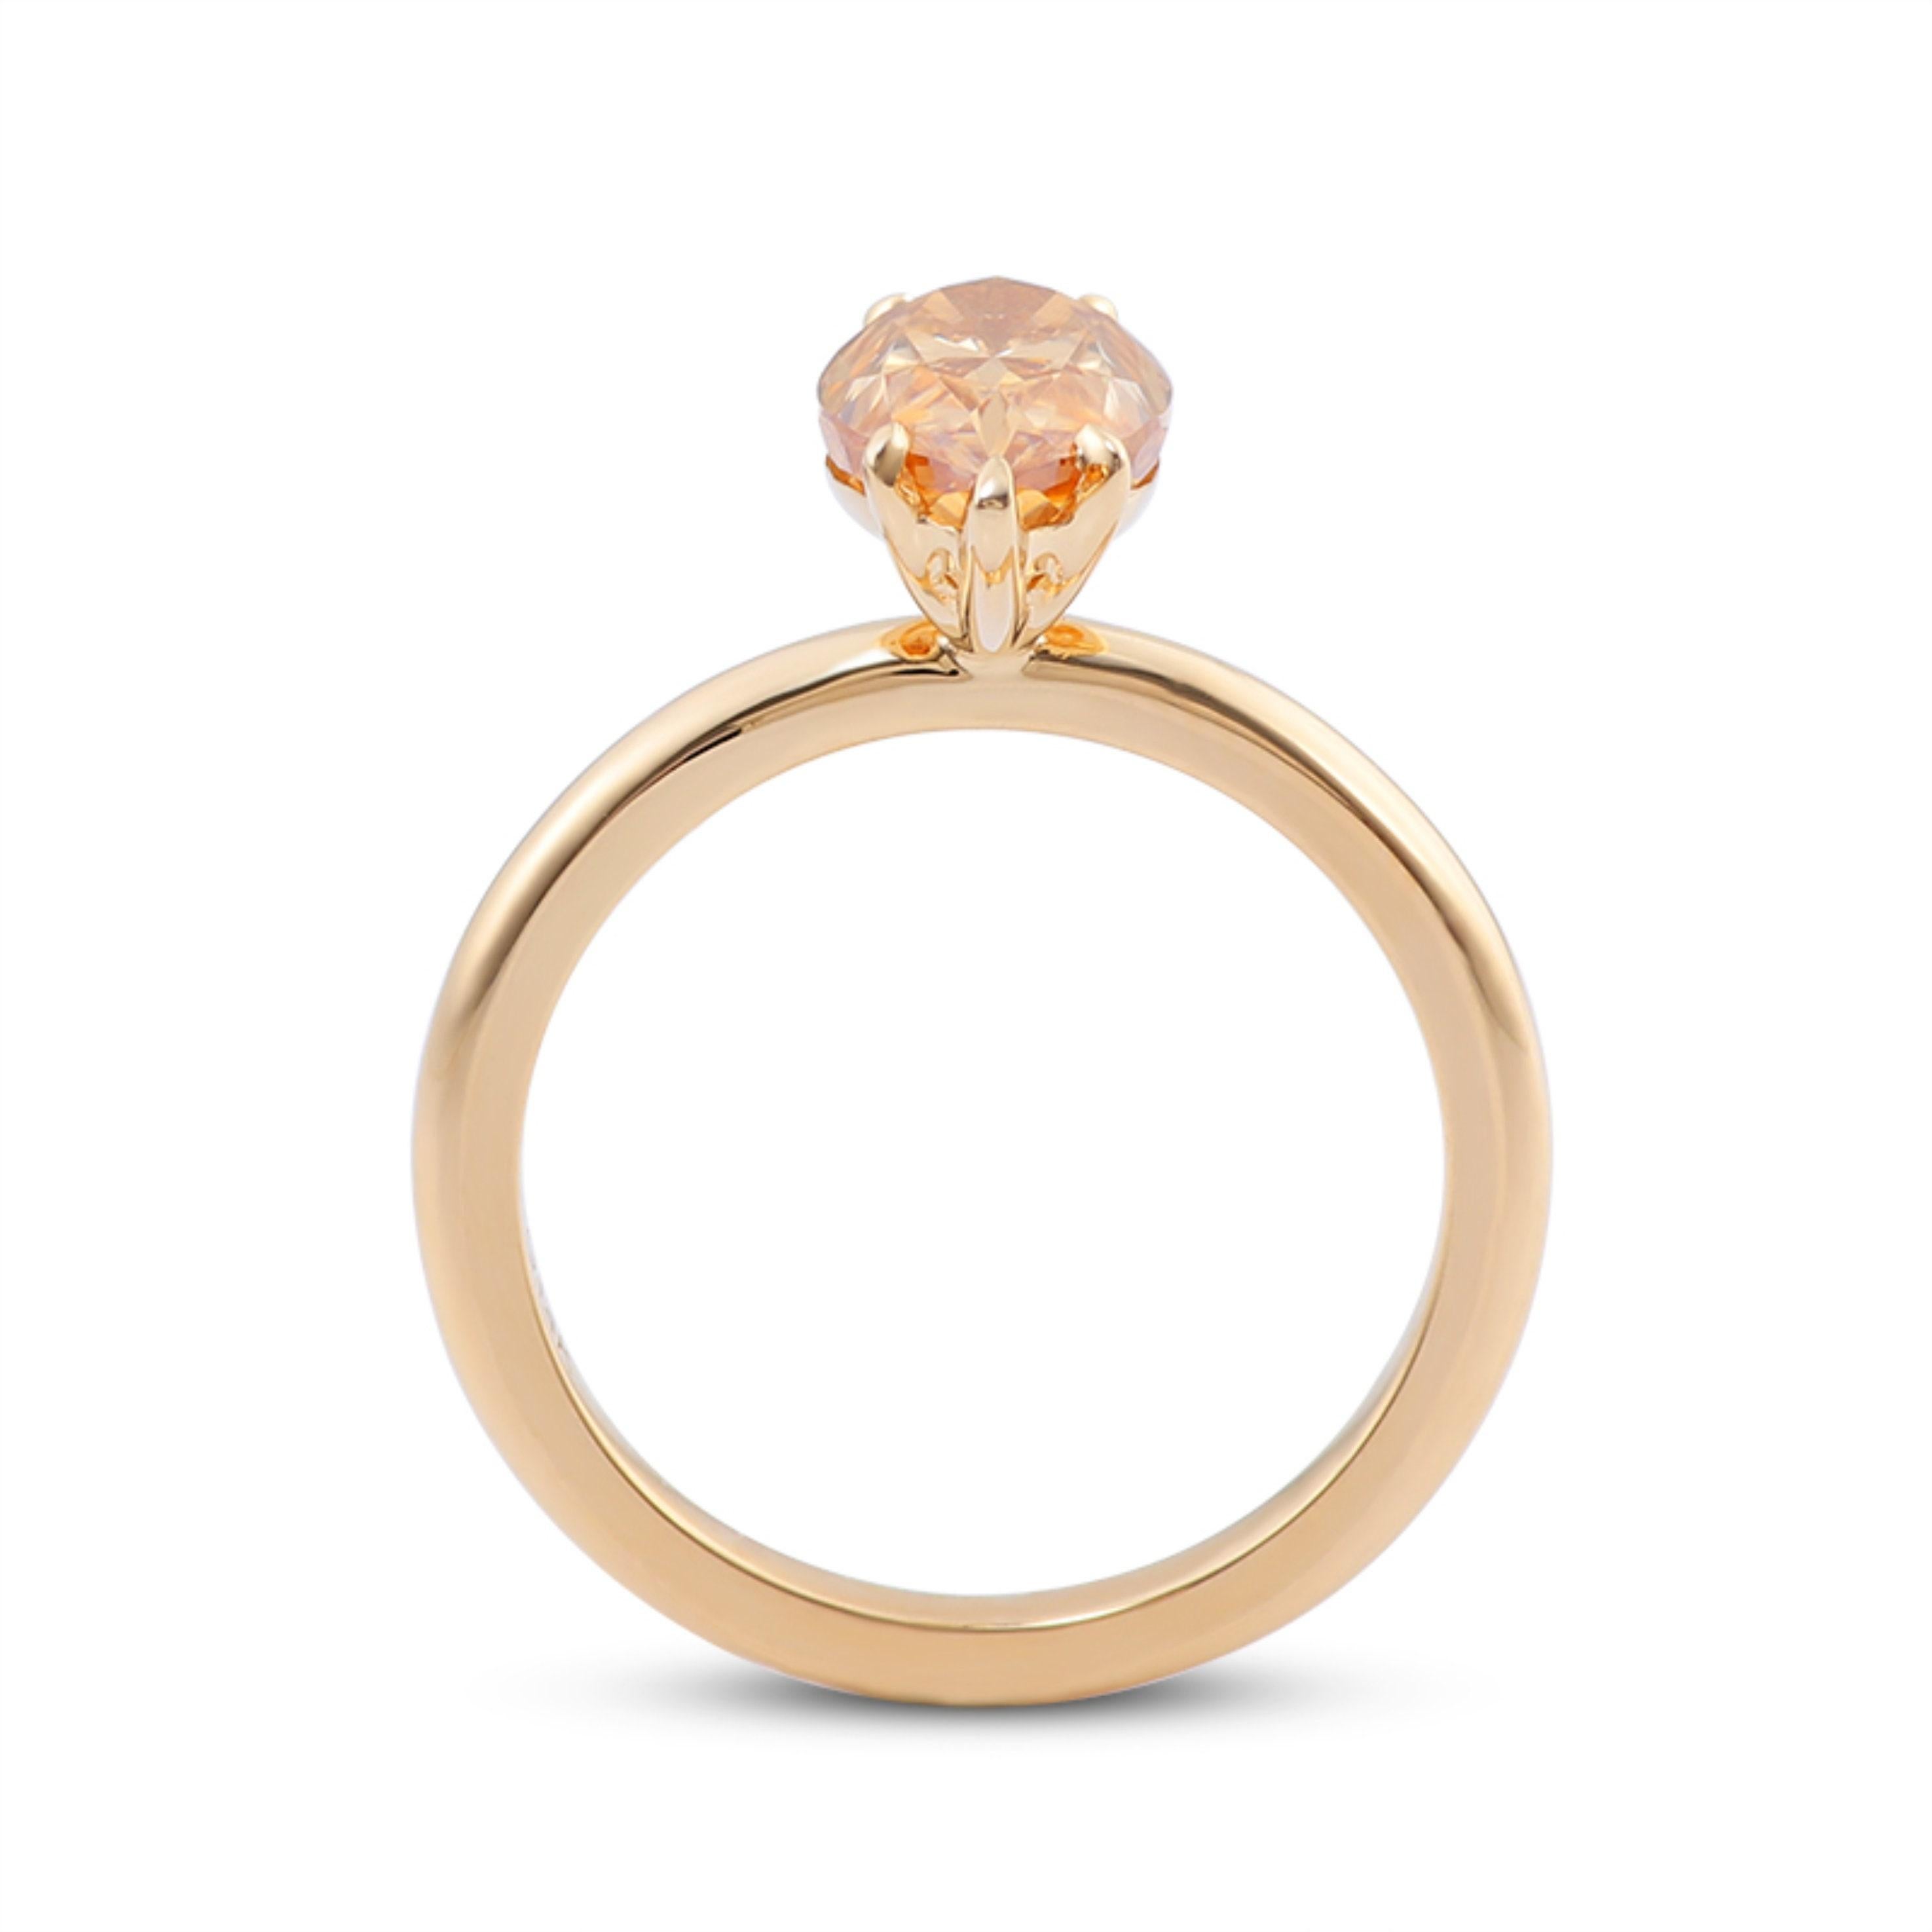 For Sale:  2 Carat Champagne Diamond Diamond Engagement Ring Bridal Wedding Ring 2